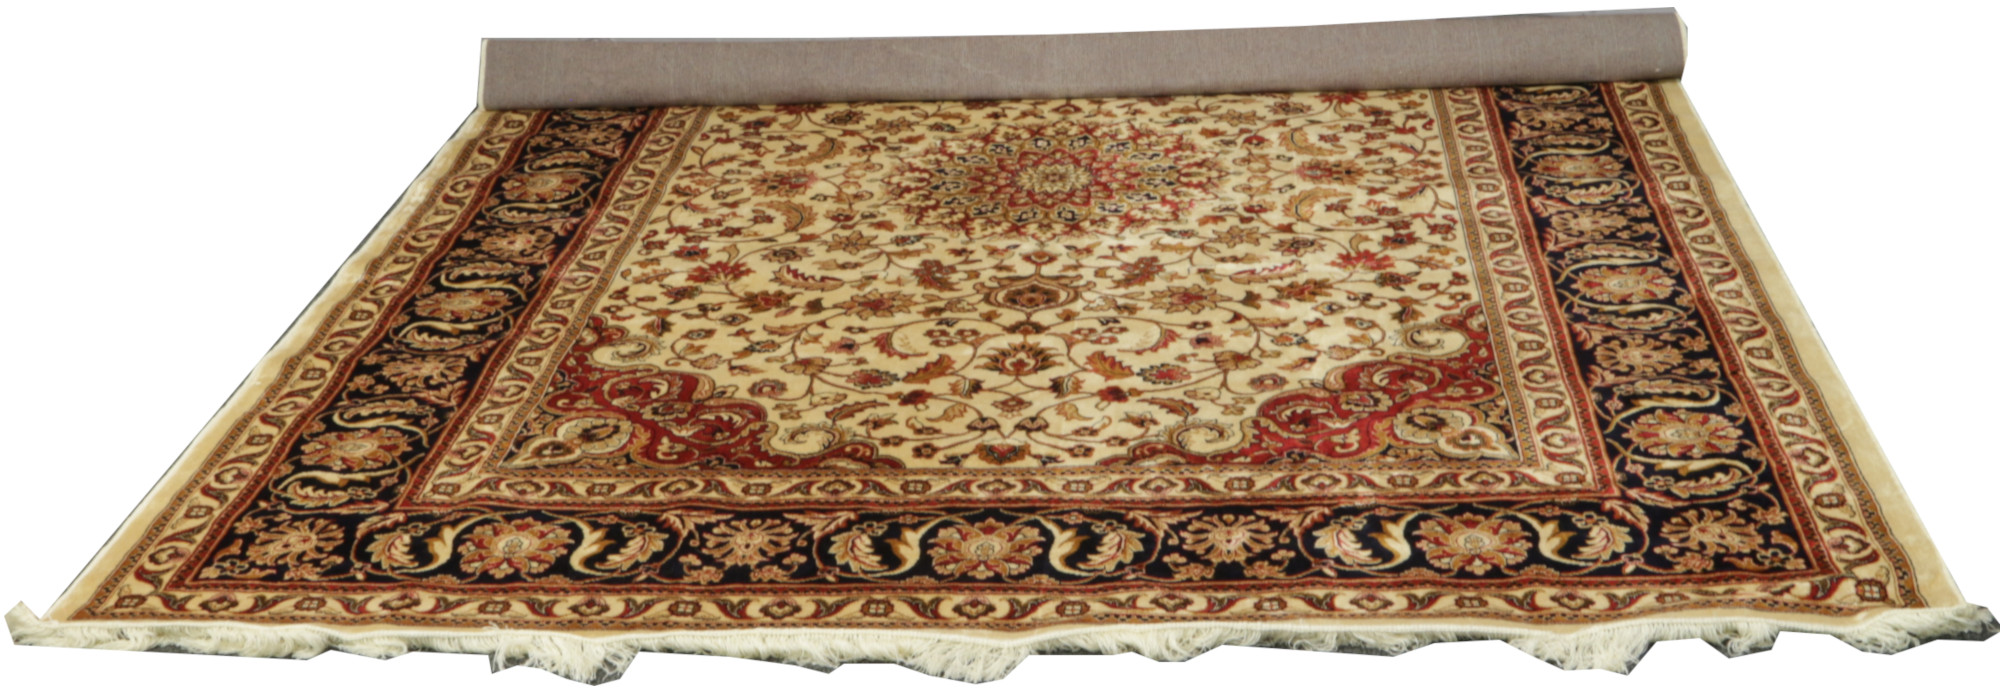 A beige ground Keshan rug with medallion design, 2.8m x 2m.